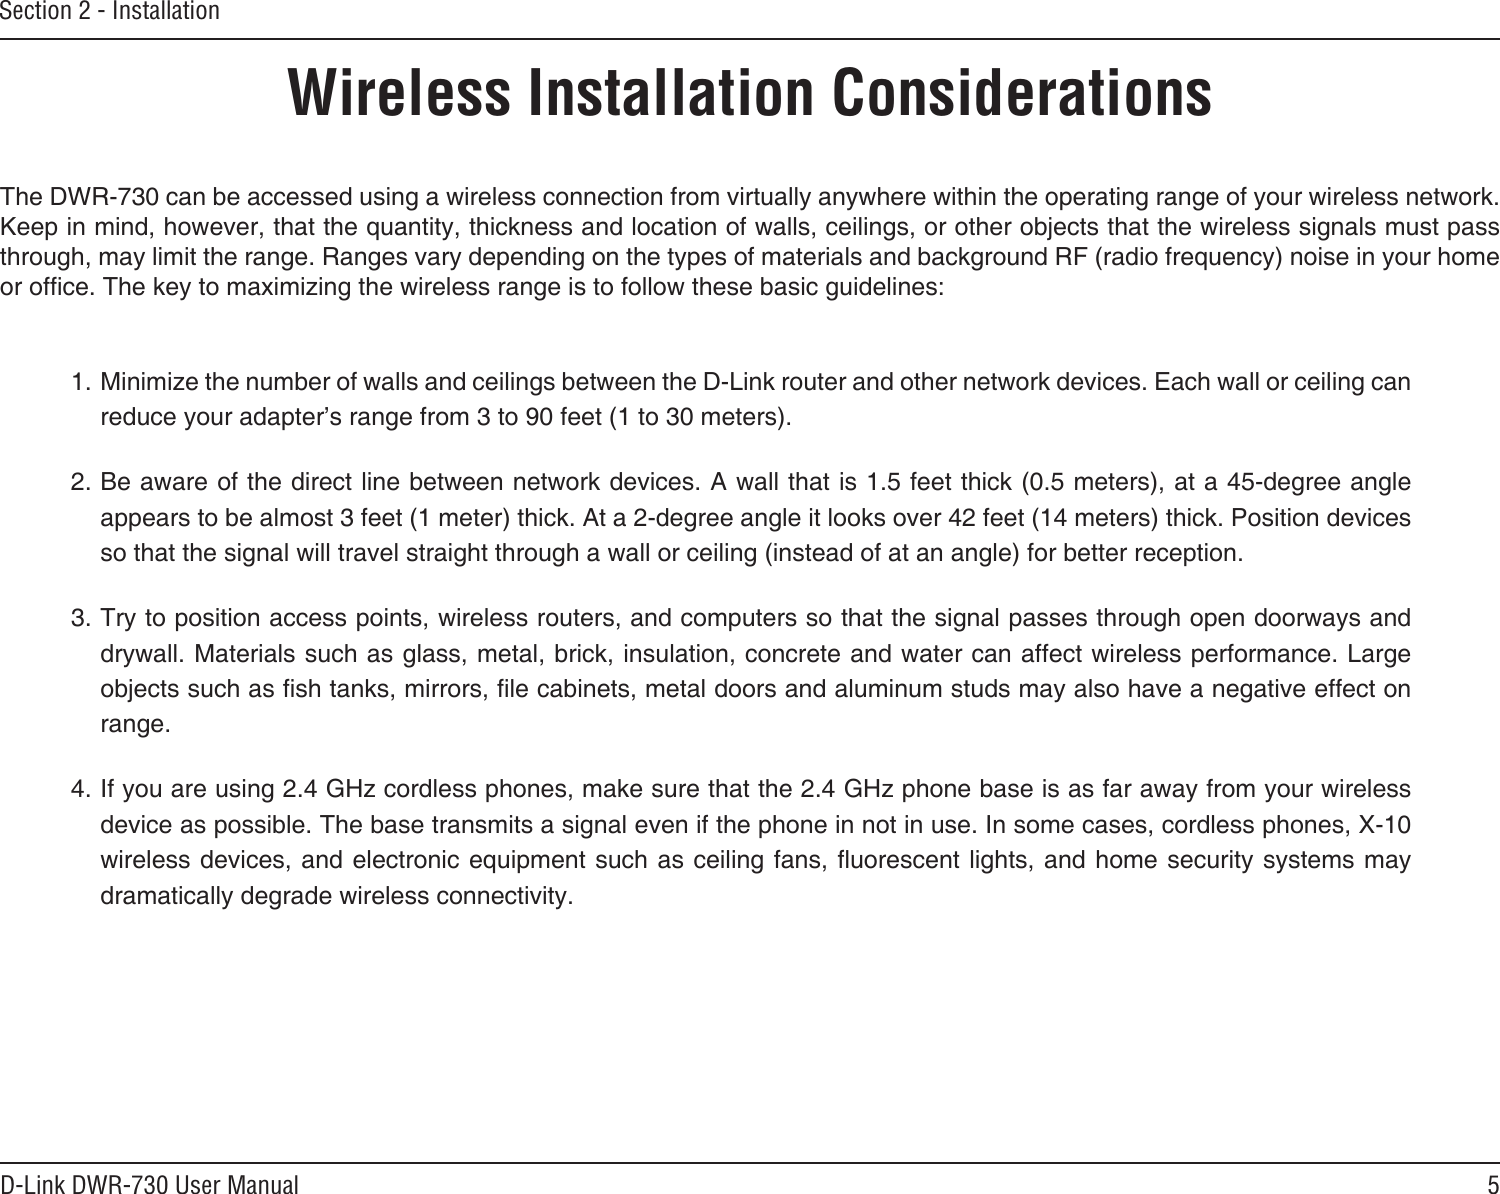 5D-Link DWR-730 User ManualSection 2 - InstallationWireless Installation Considerations 